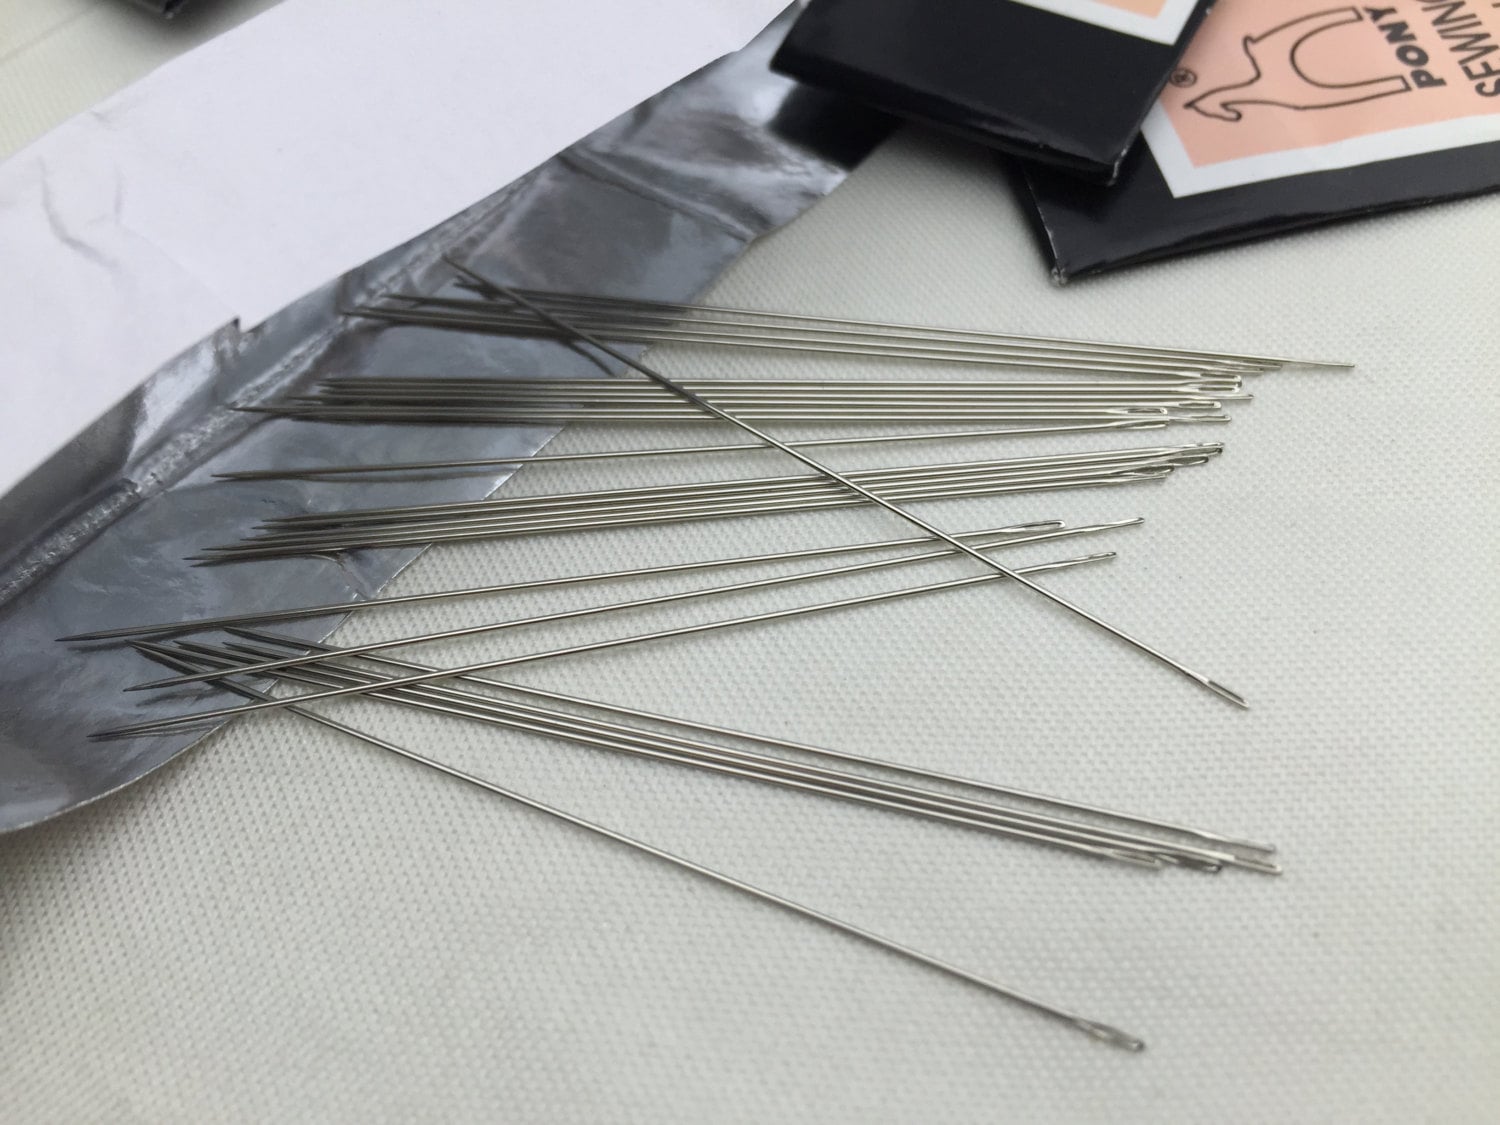 Big Eye Beading Needle/iron Flexible Needle Tools & Supplies for Stringing  Bead Weaving Stitches 1 Pieces 